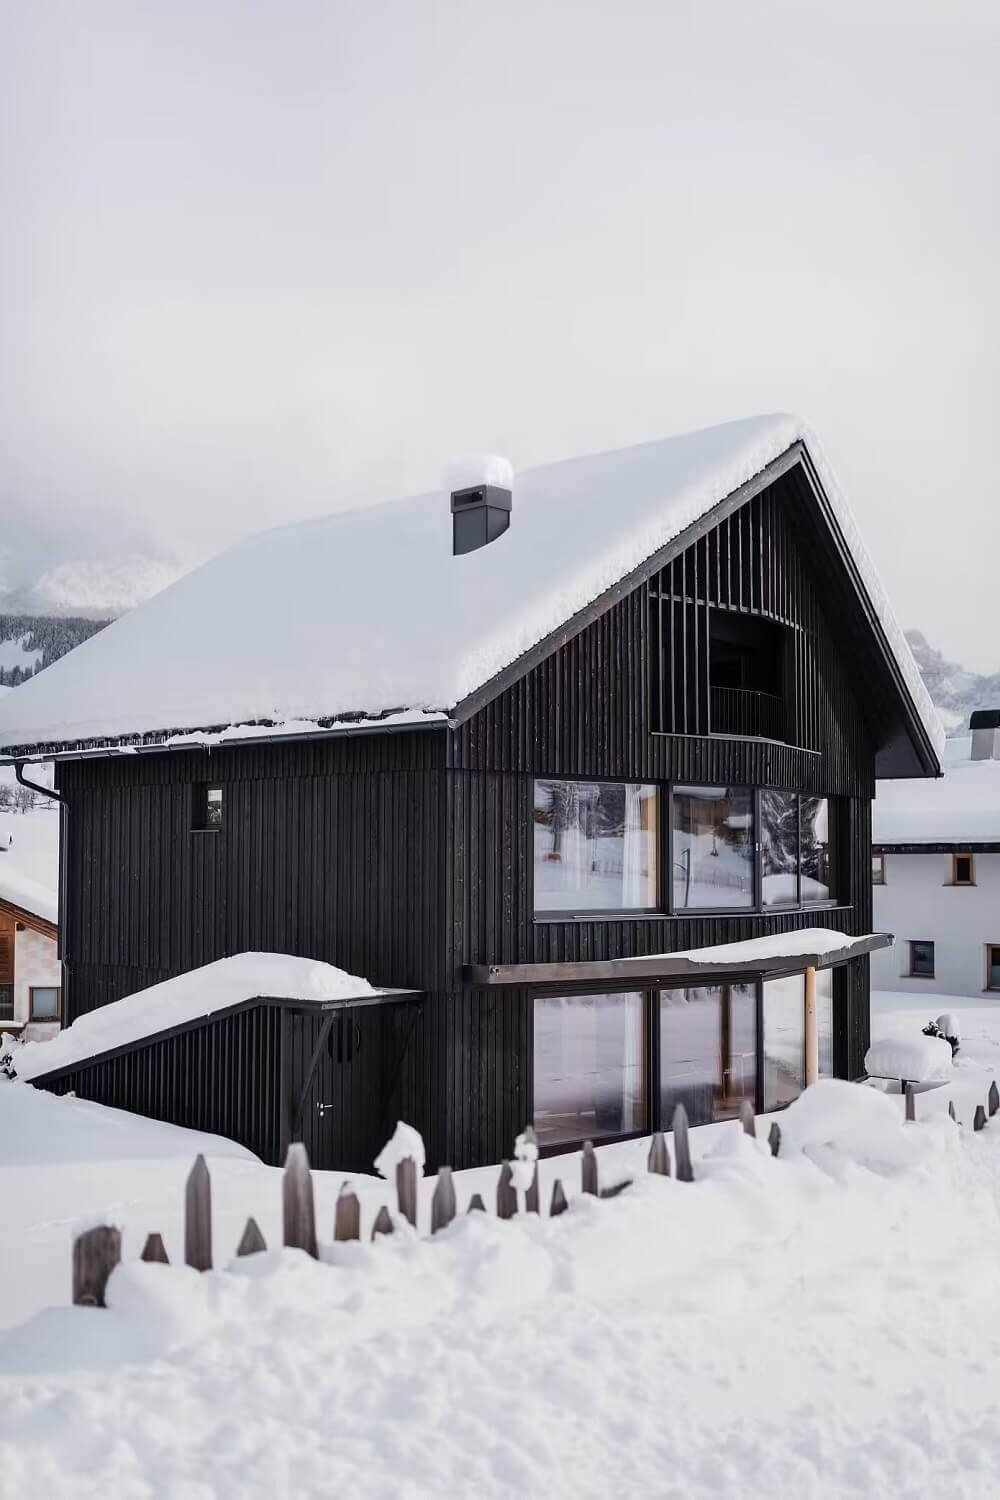 Moderno refugio de madera fachada nevada